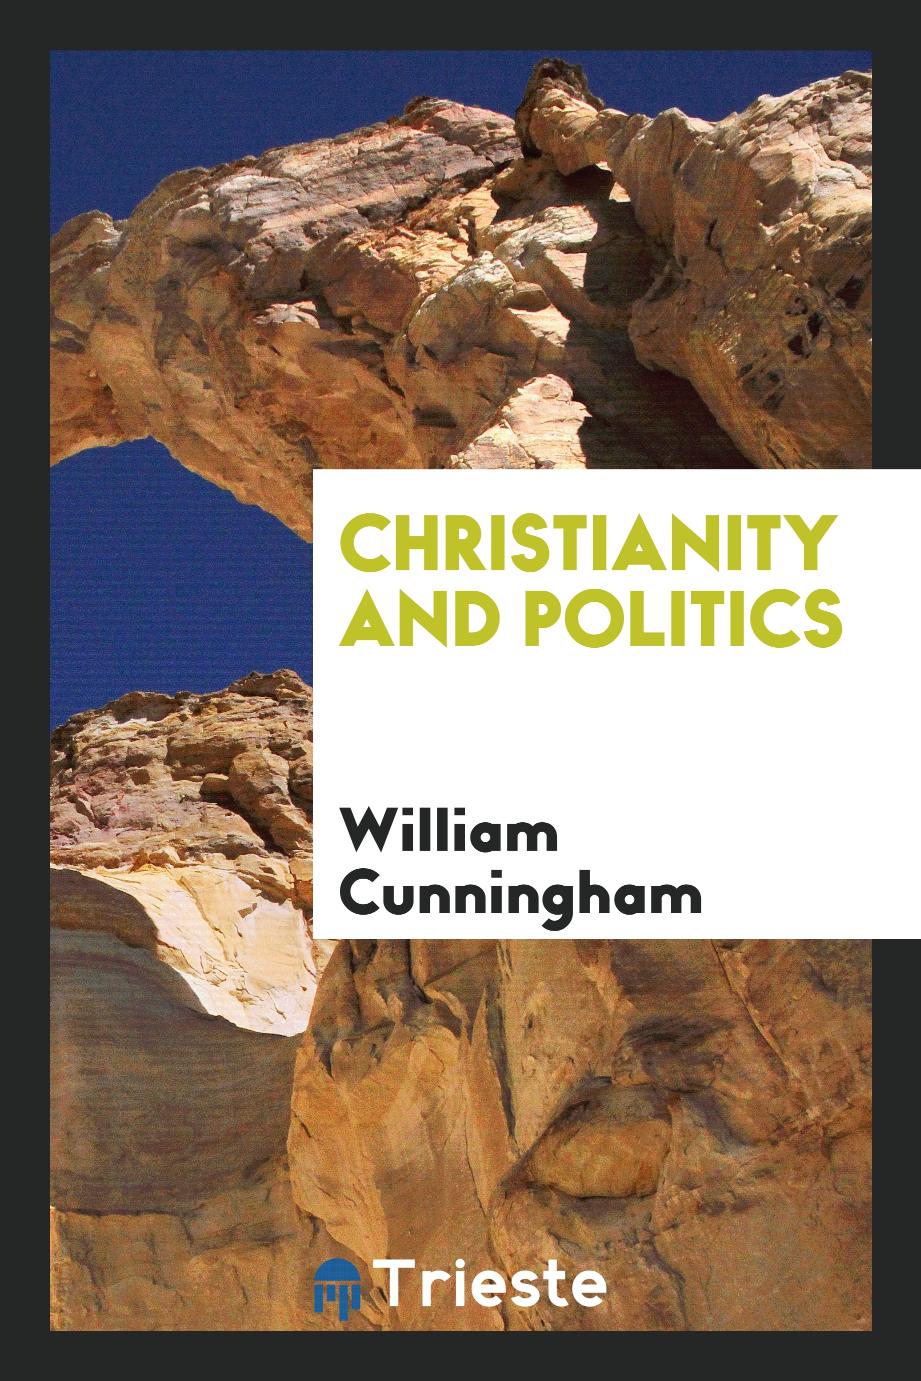 Christianity and politics